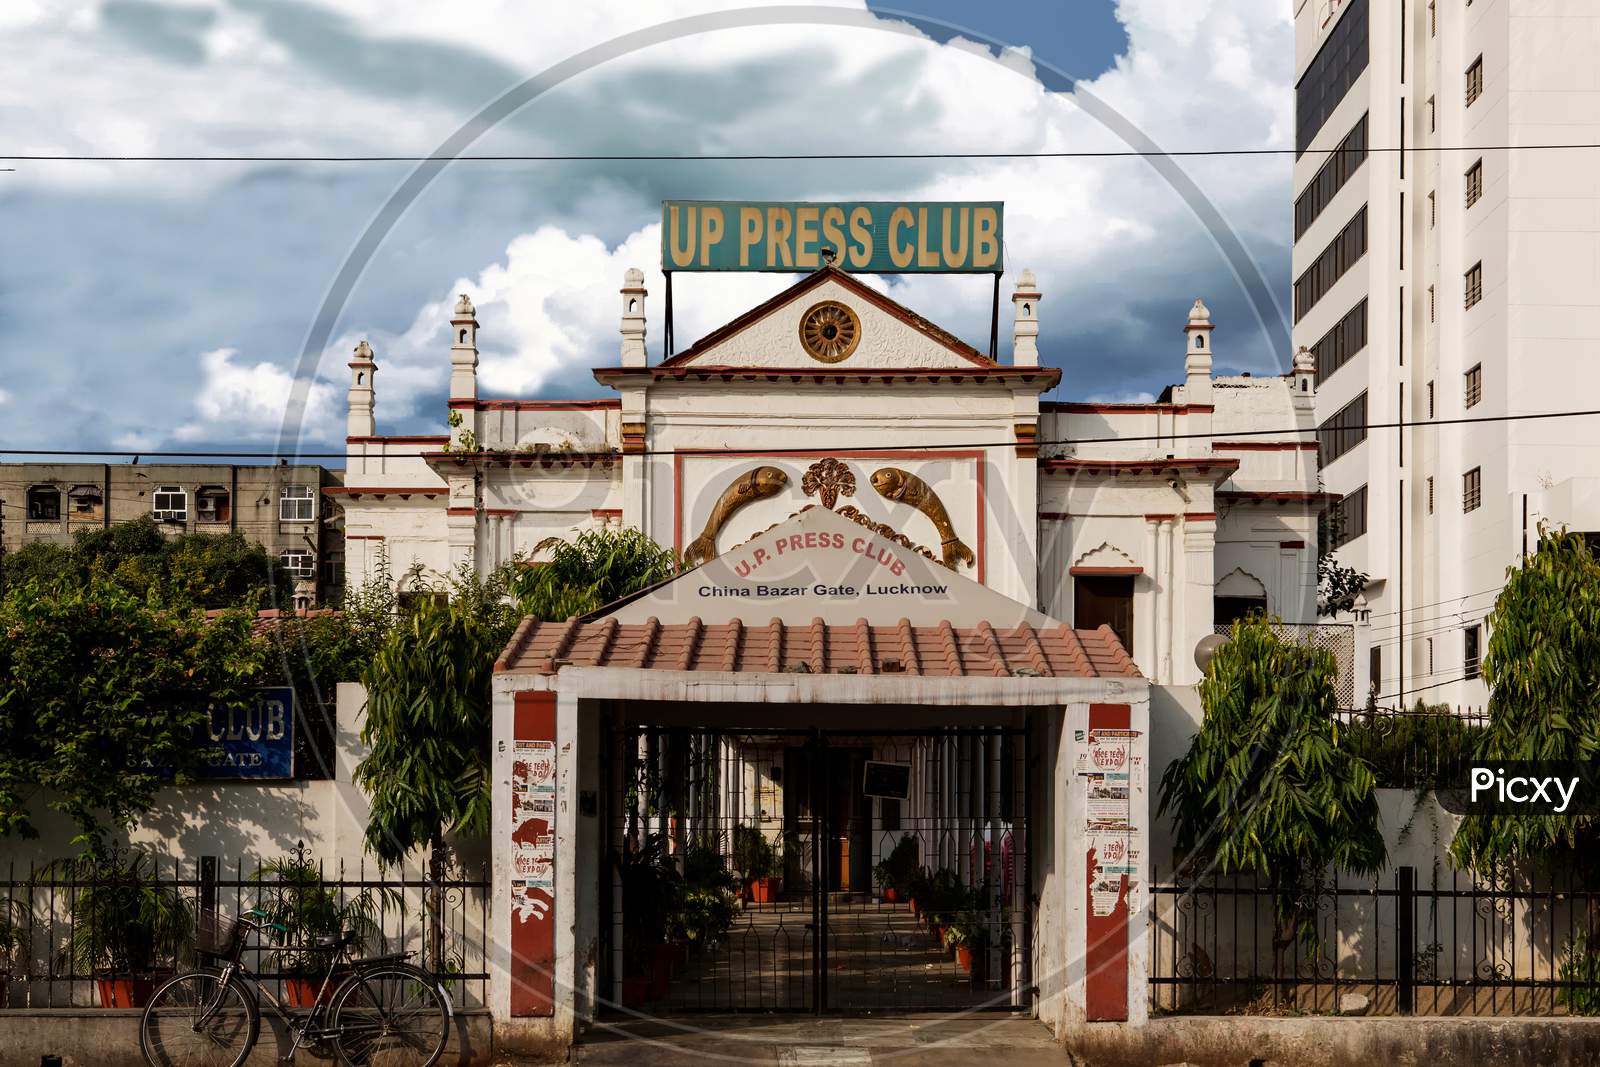 UP Press Club or Uttar Pradesh Press Club, Lucknow